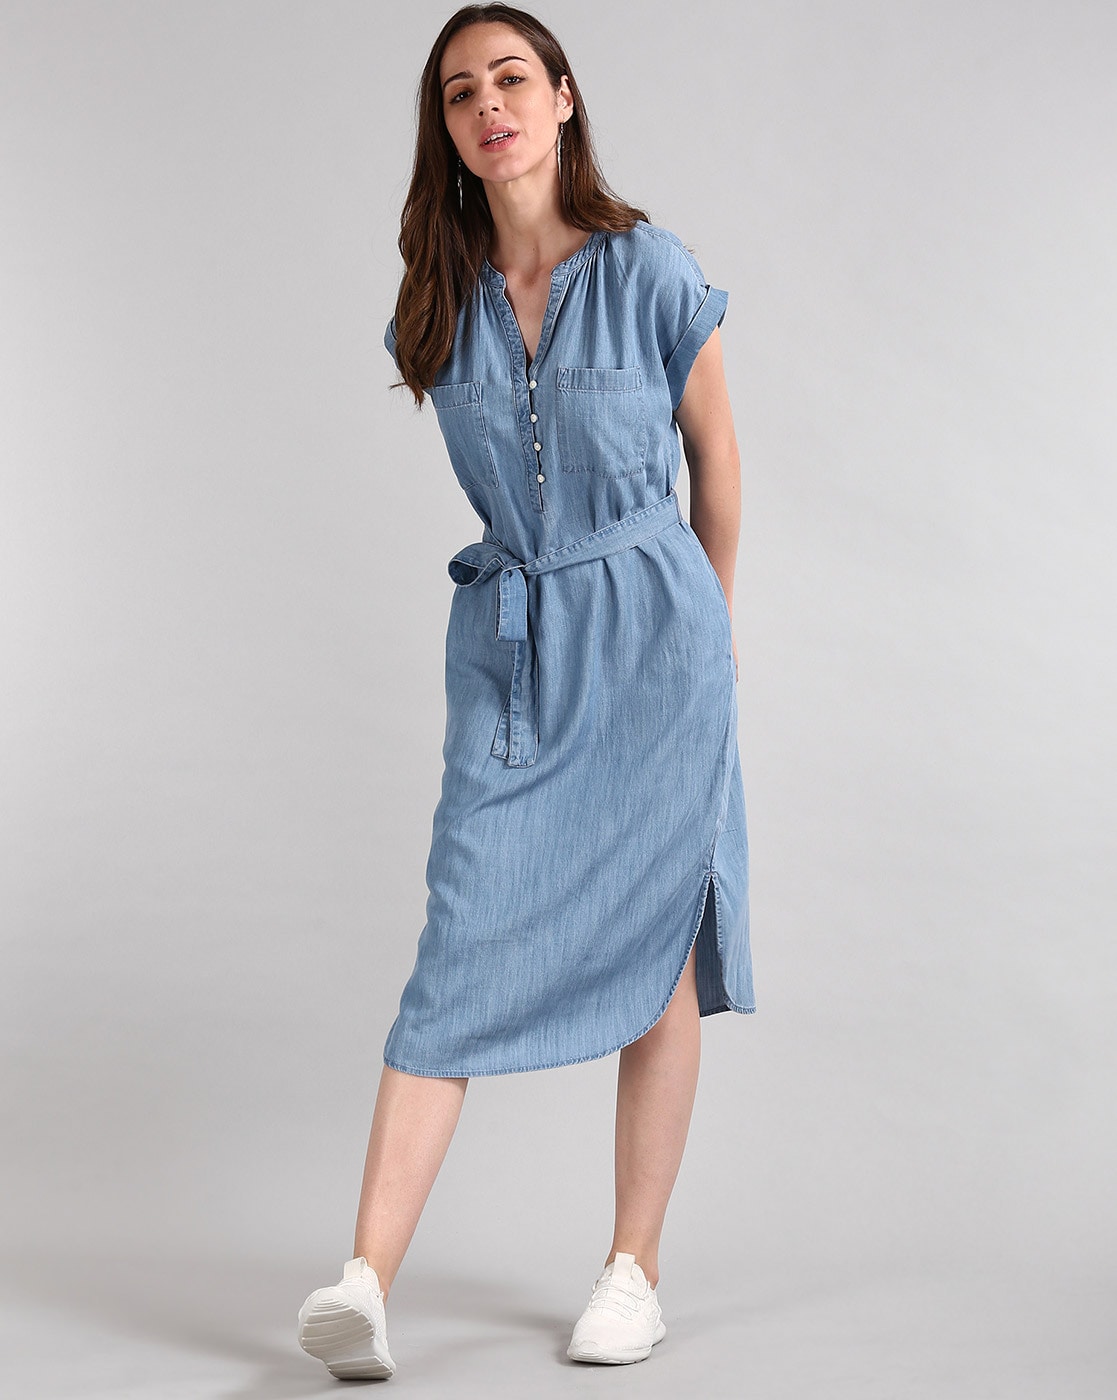 Gap - Blue Denim Fit & Flare Dress Cotton | SilkRoll